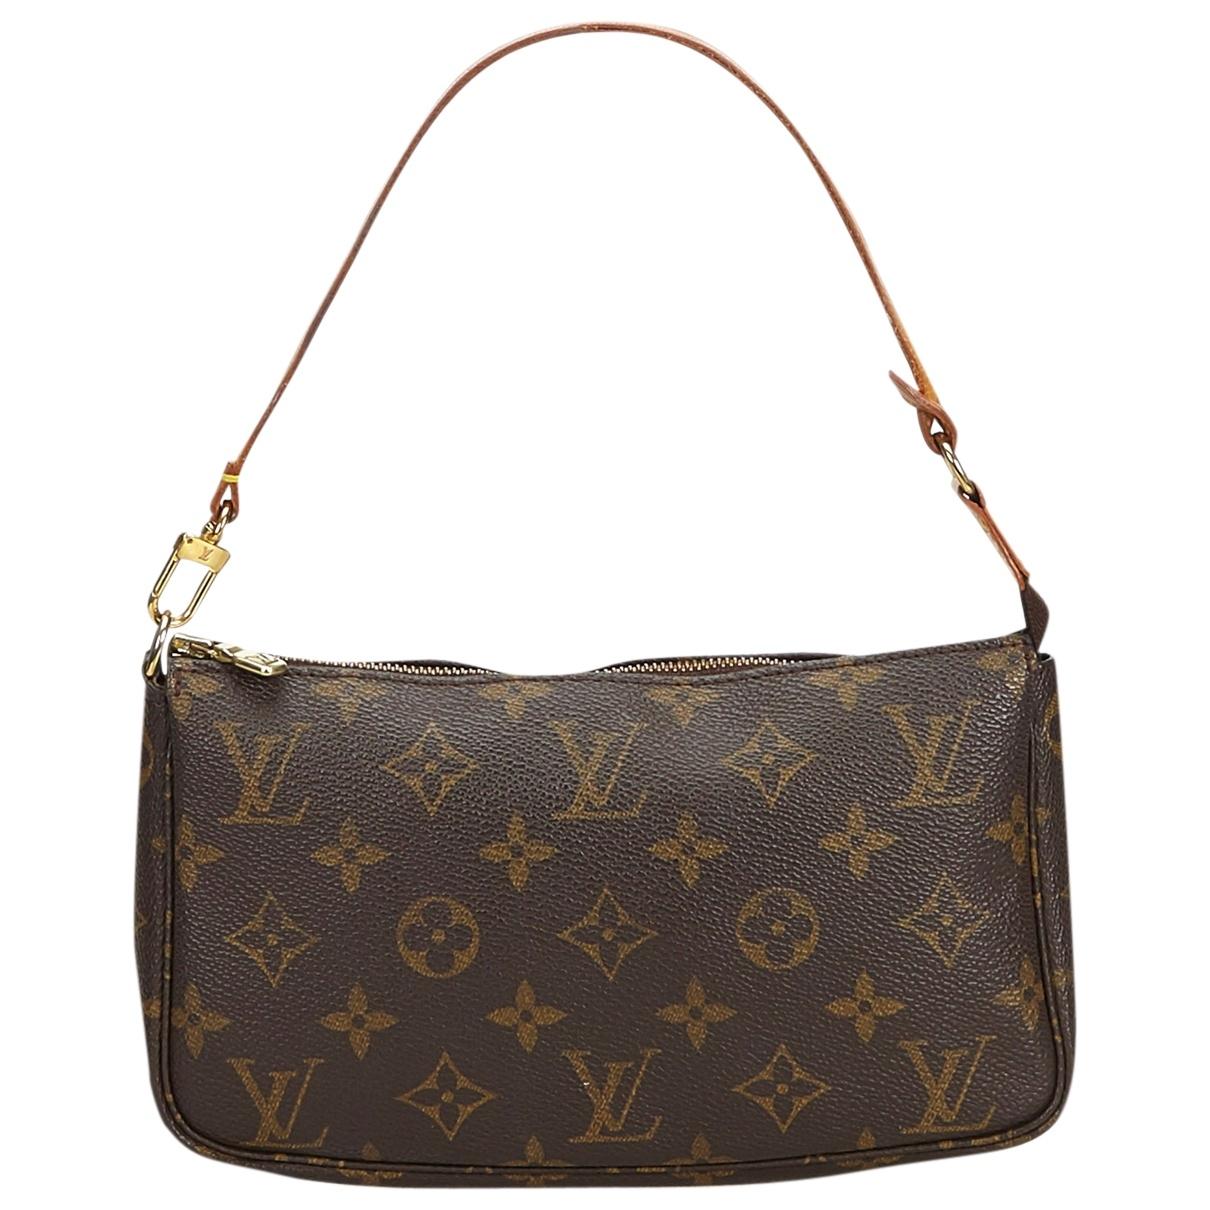 Lyst - Louis Vuitton Pochette Accessoire Brown Plastic Clutch Bag in Brown